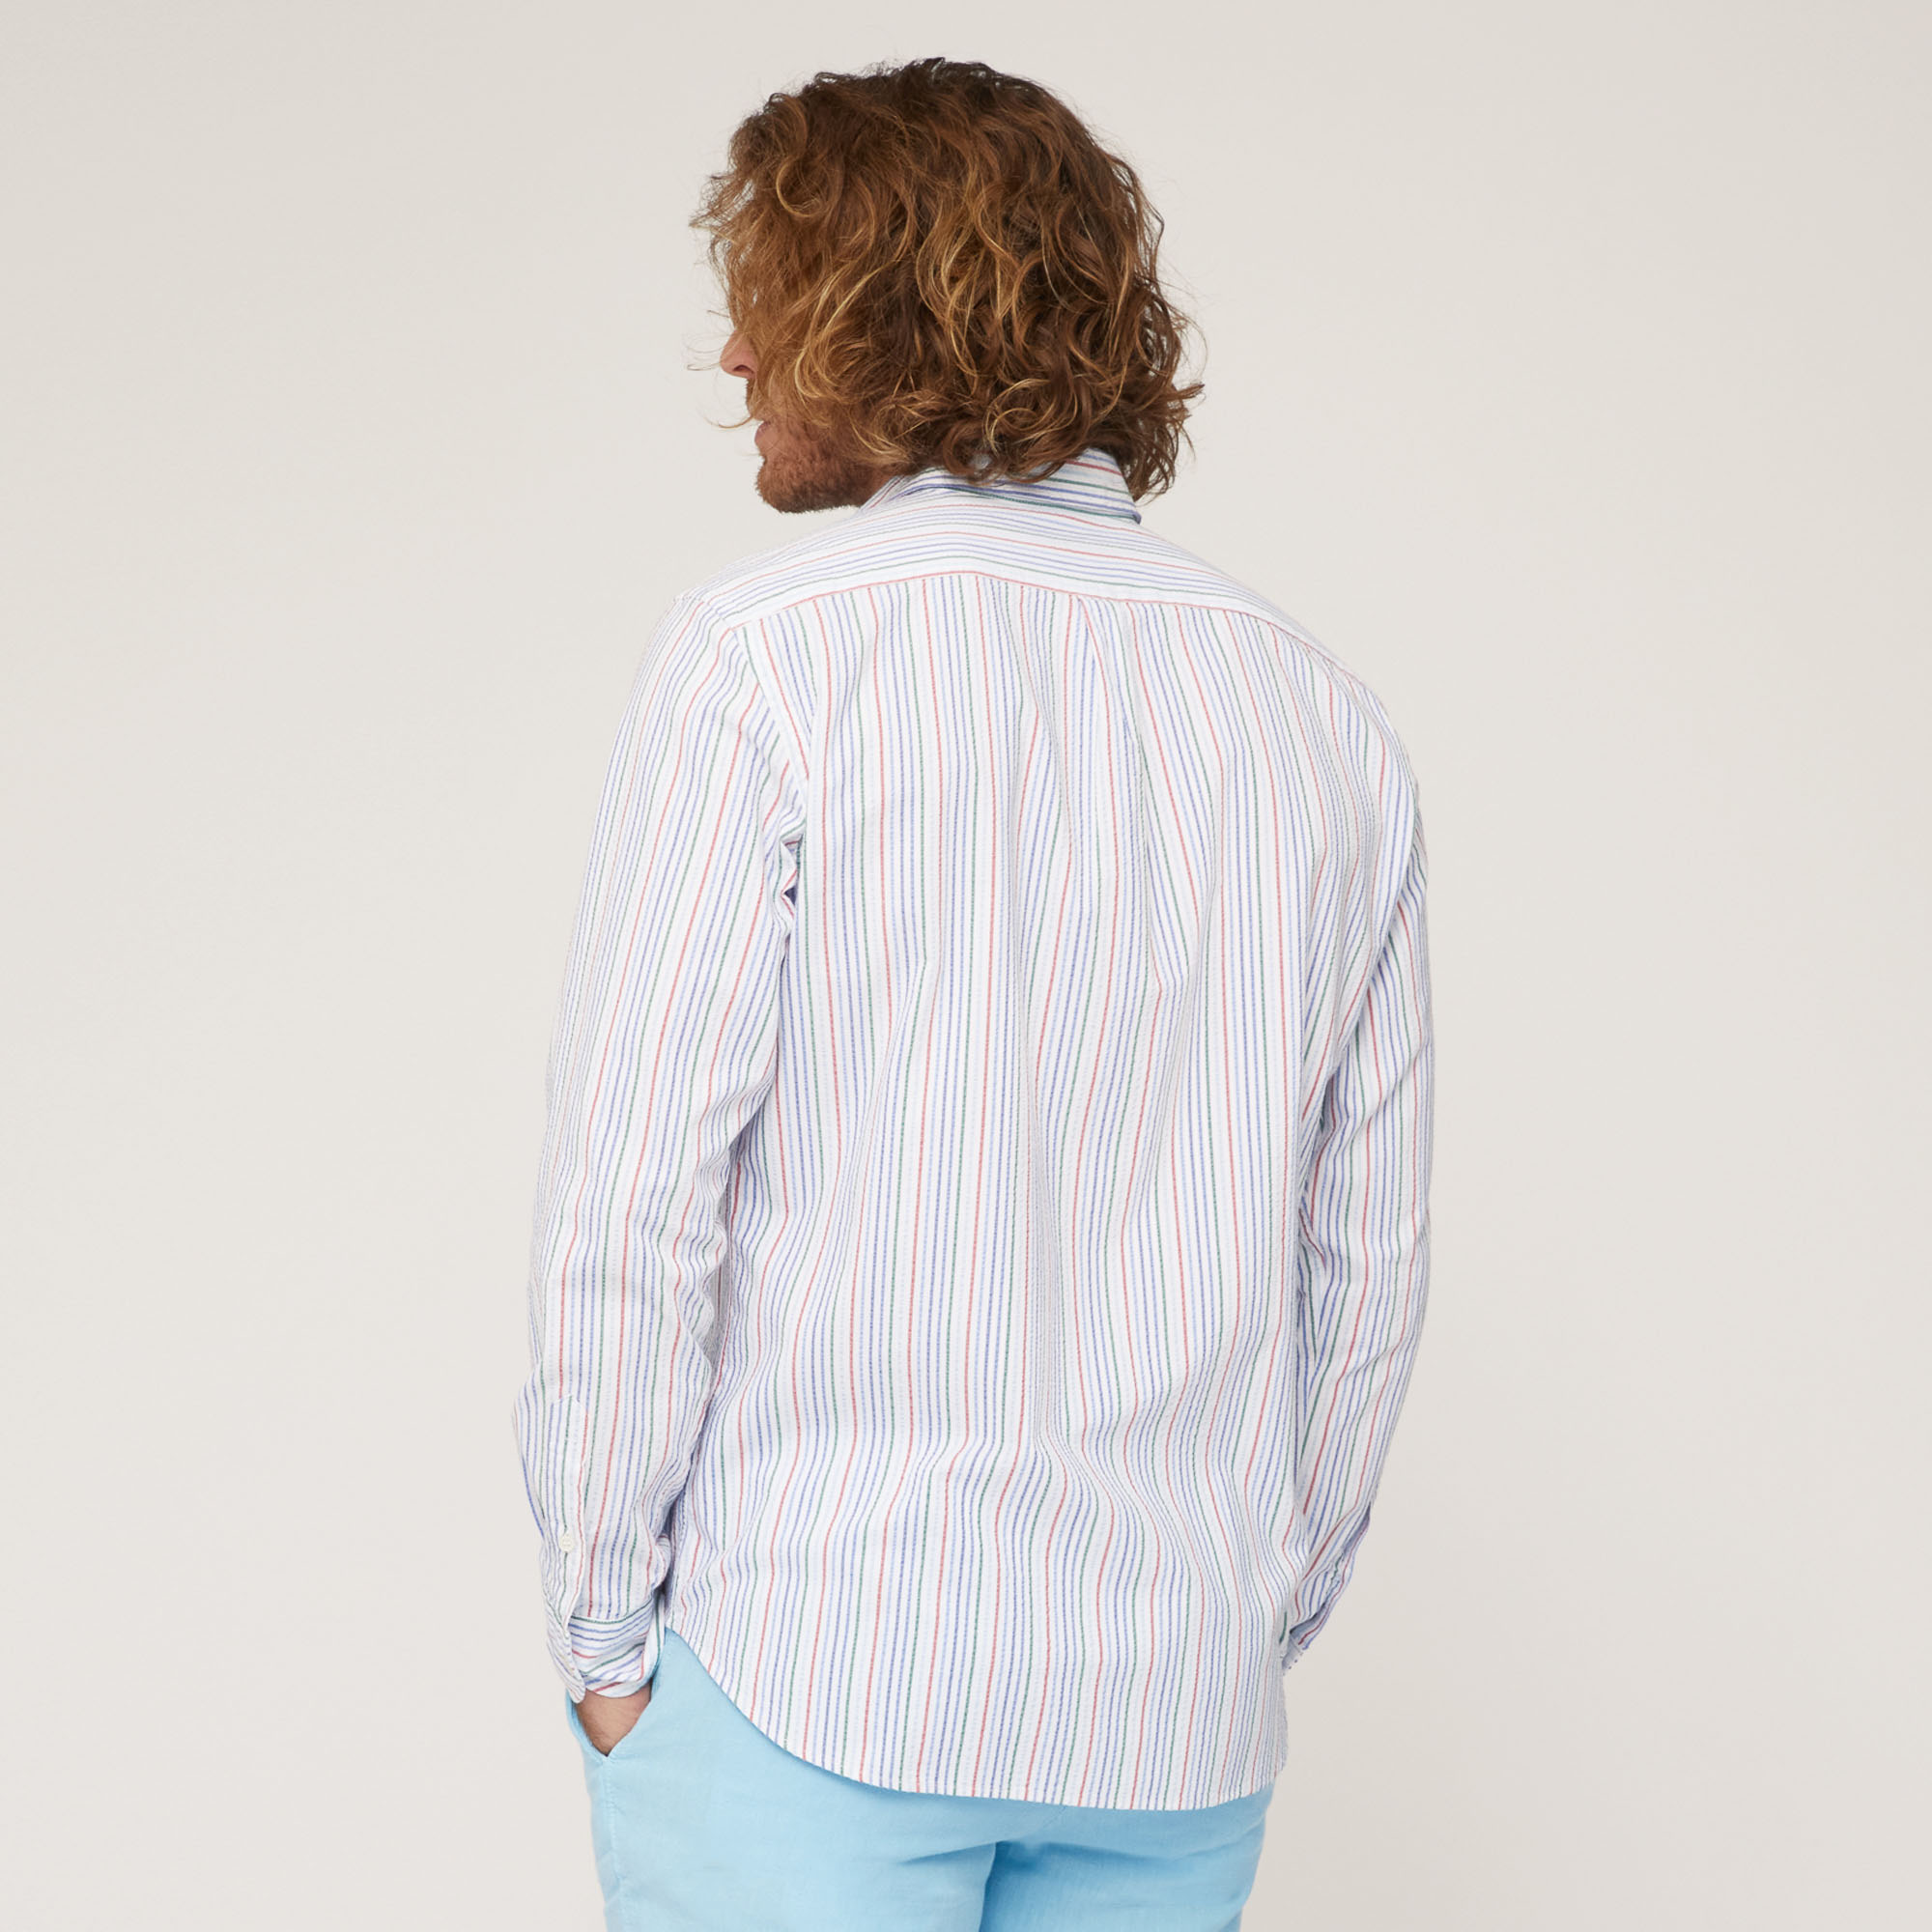 Multicolored Seersucker Stripe Cotton Shirt, White, large image number 1